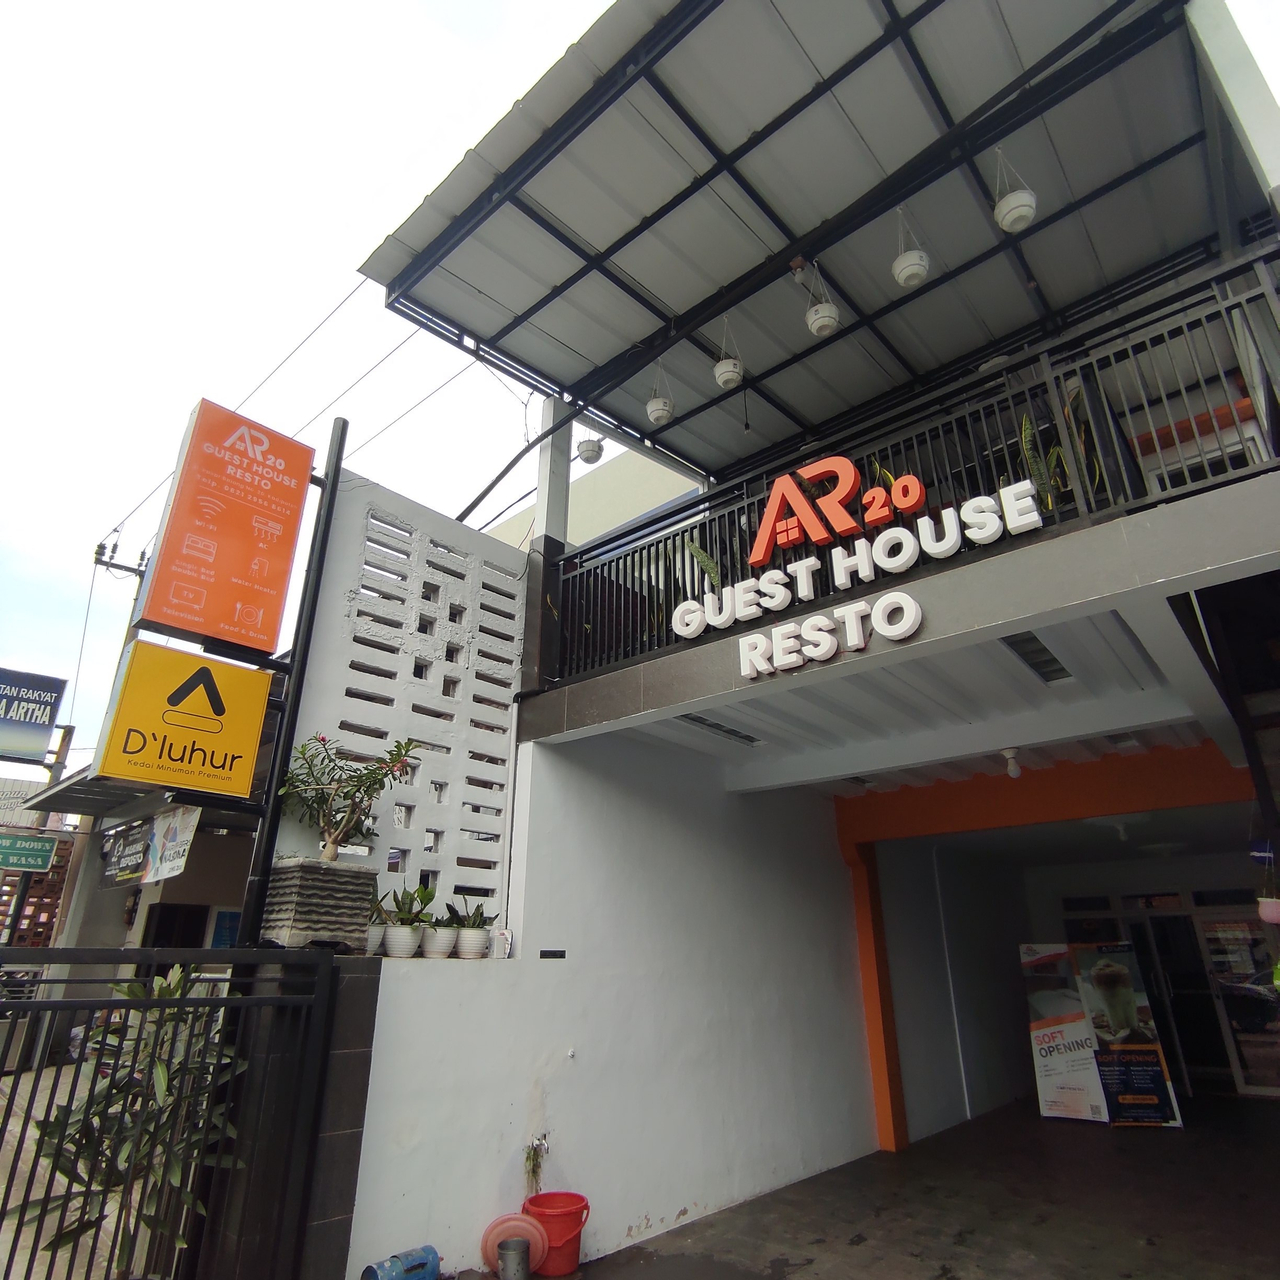 Exterior & Views, AR20 Guest House & Resto, Majalengka